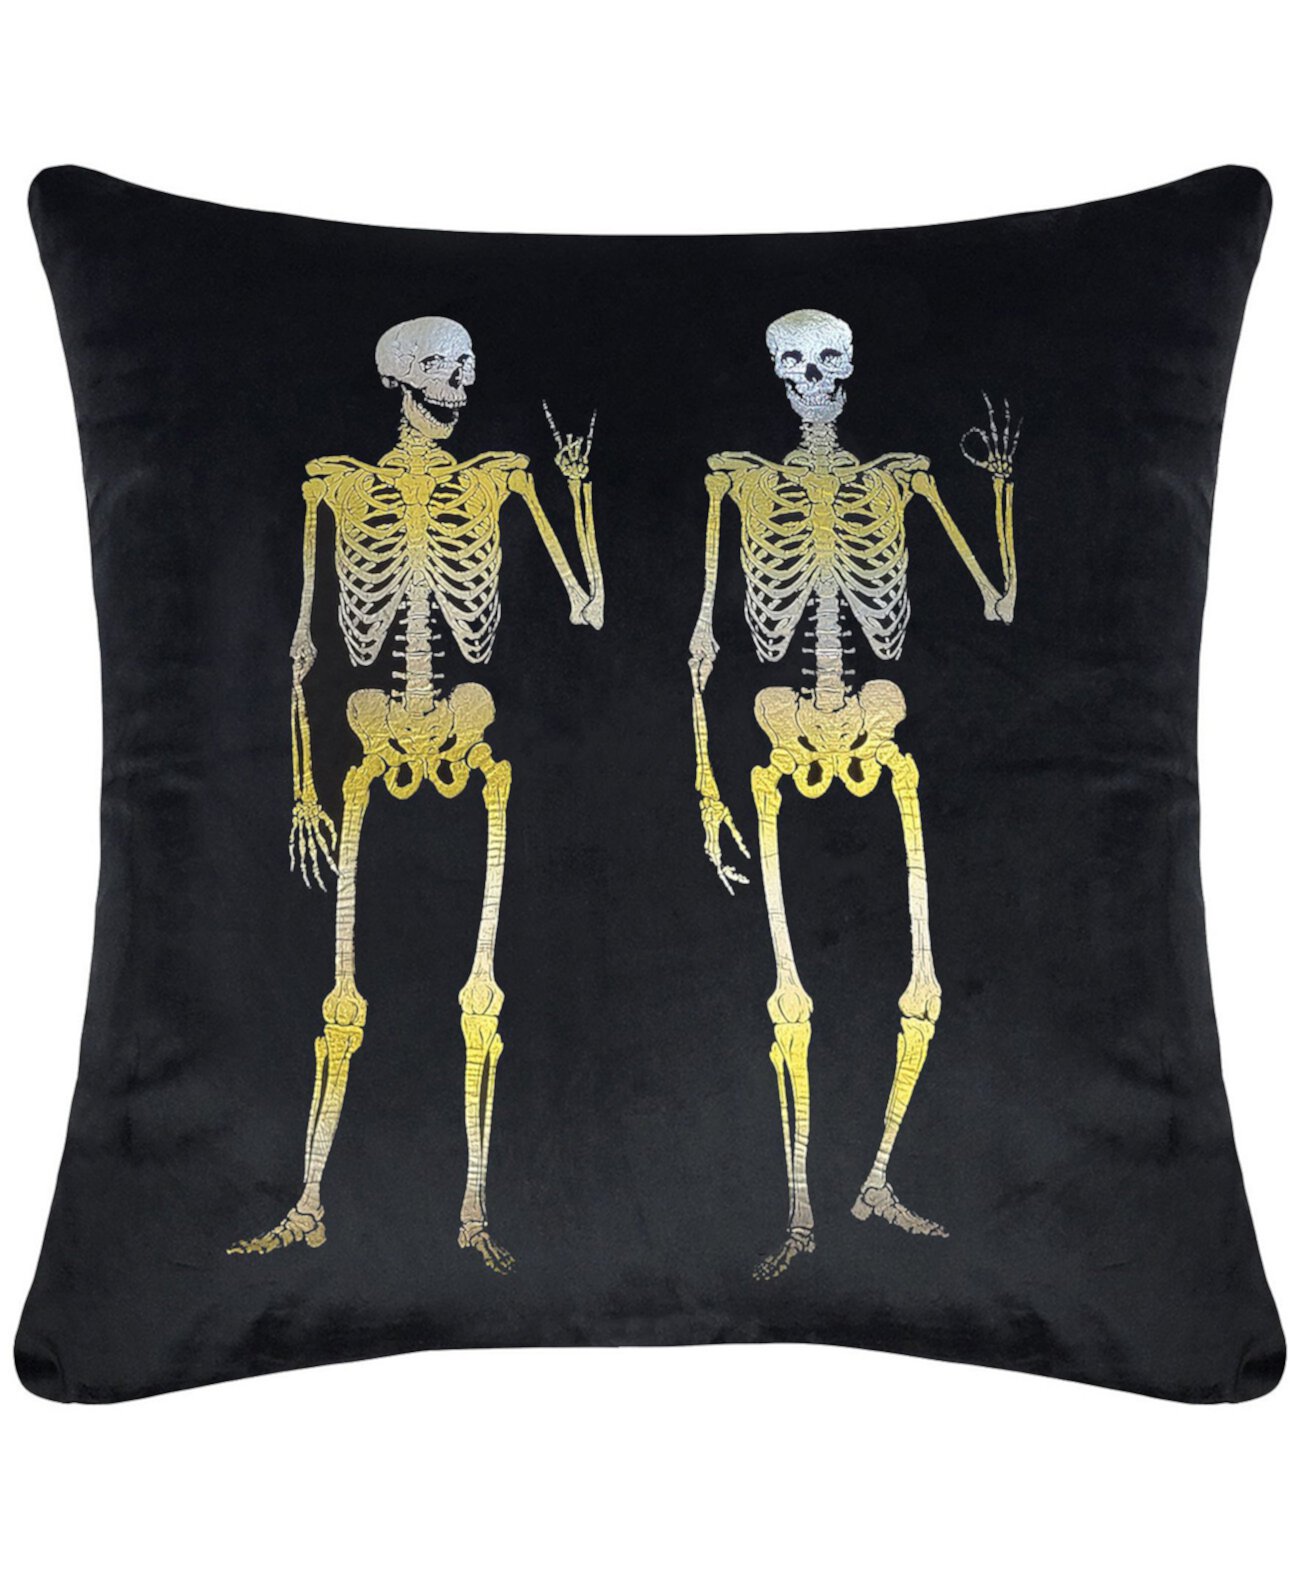 Декоративная декоративная подушка Velvet Rocker Skeletons, 18 x 18 дюймов Edie@Home